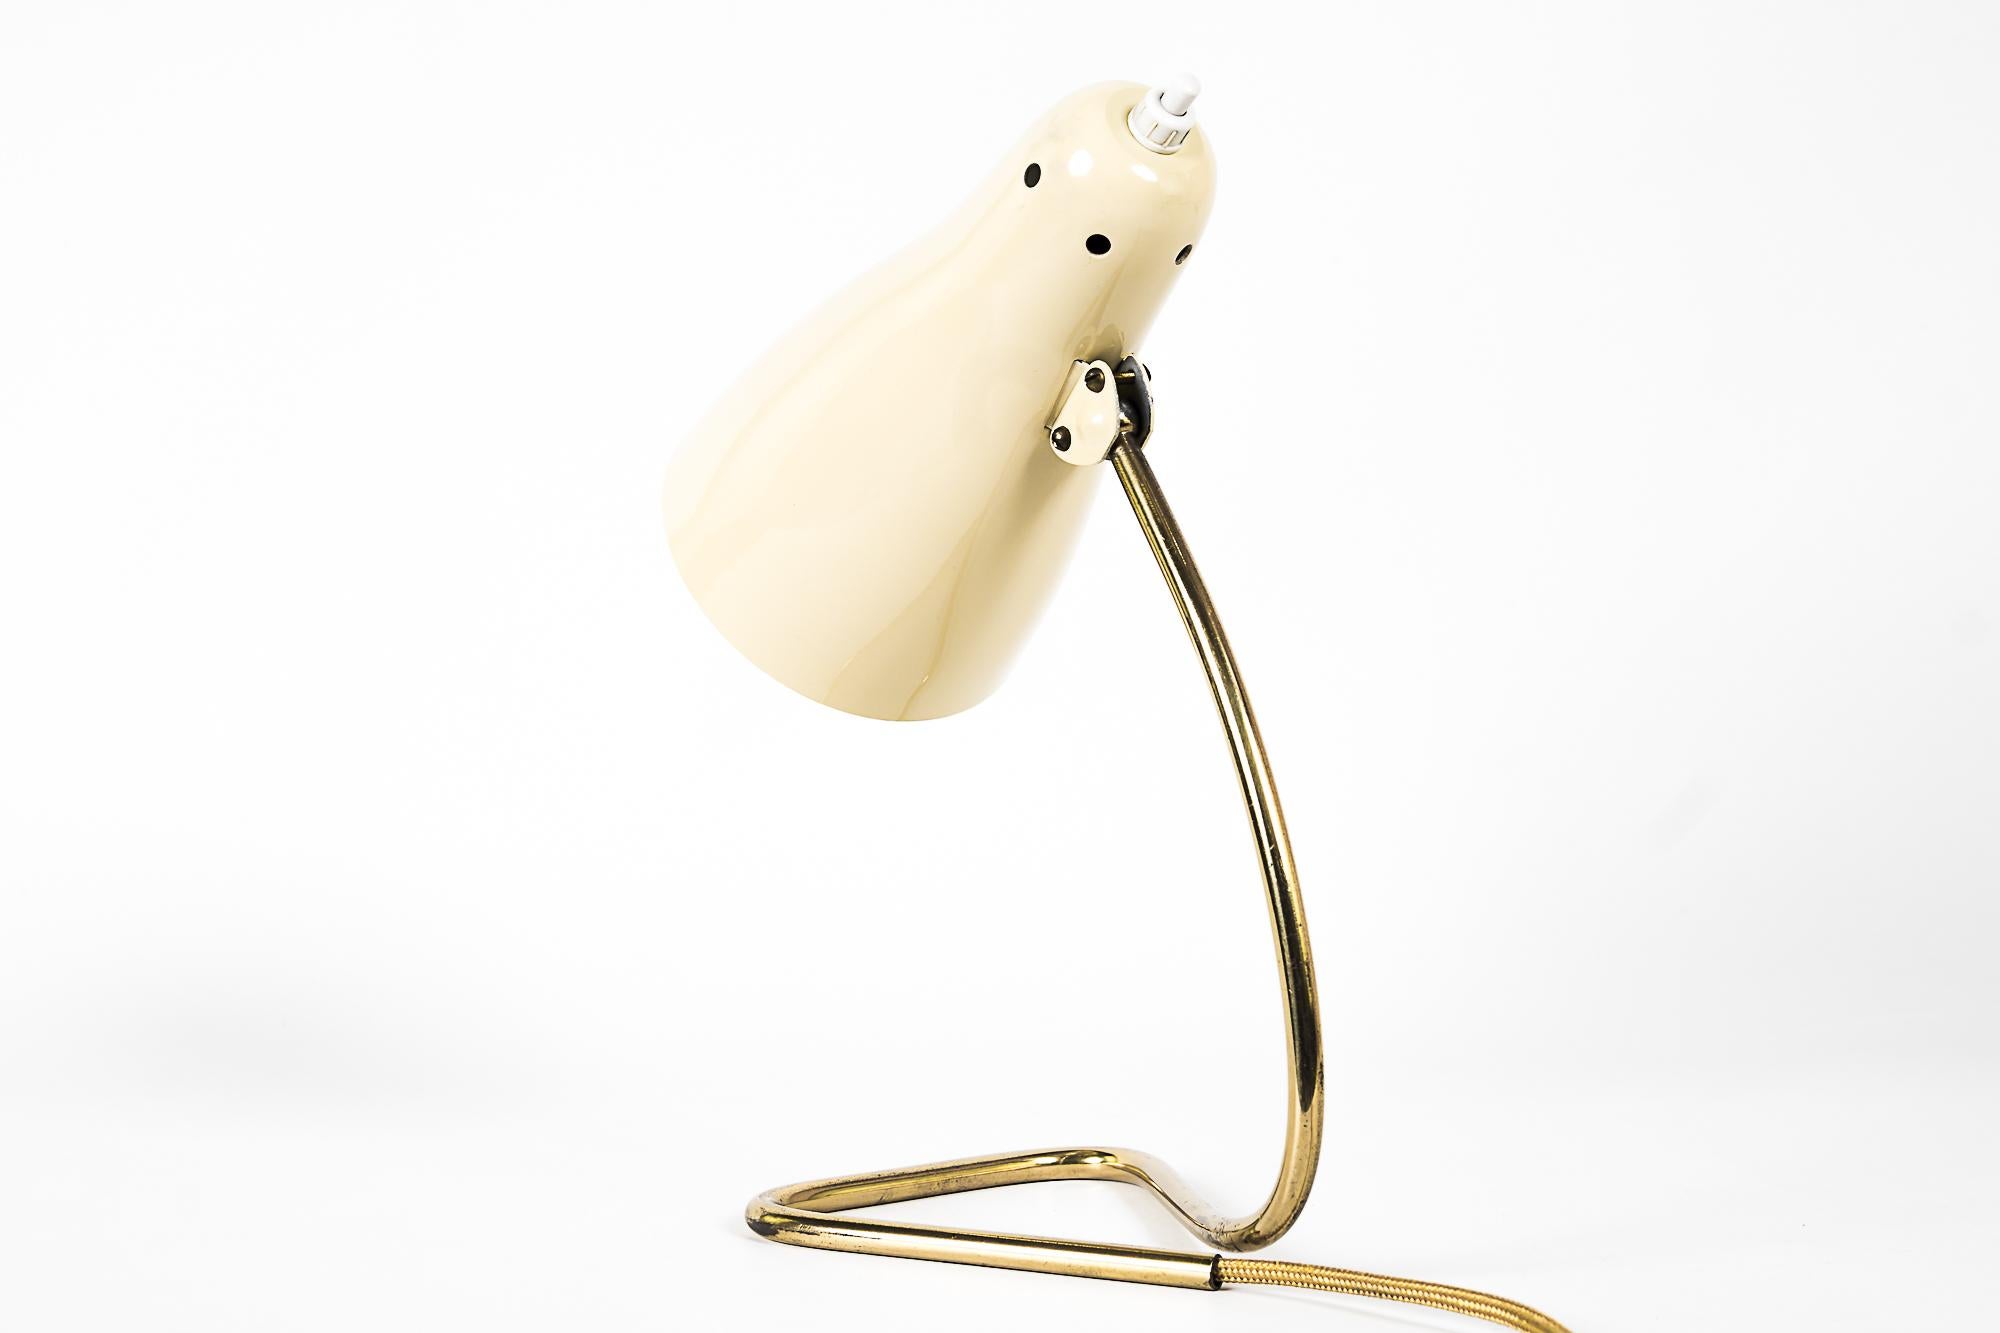 Rupert Nikoll table lamp, Vienna, 1960s
Original condition.